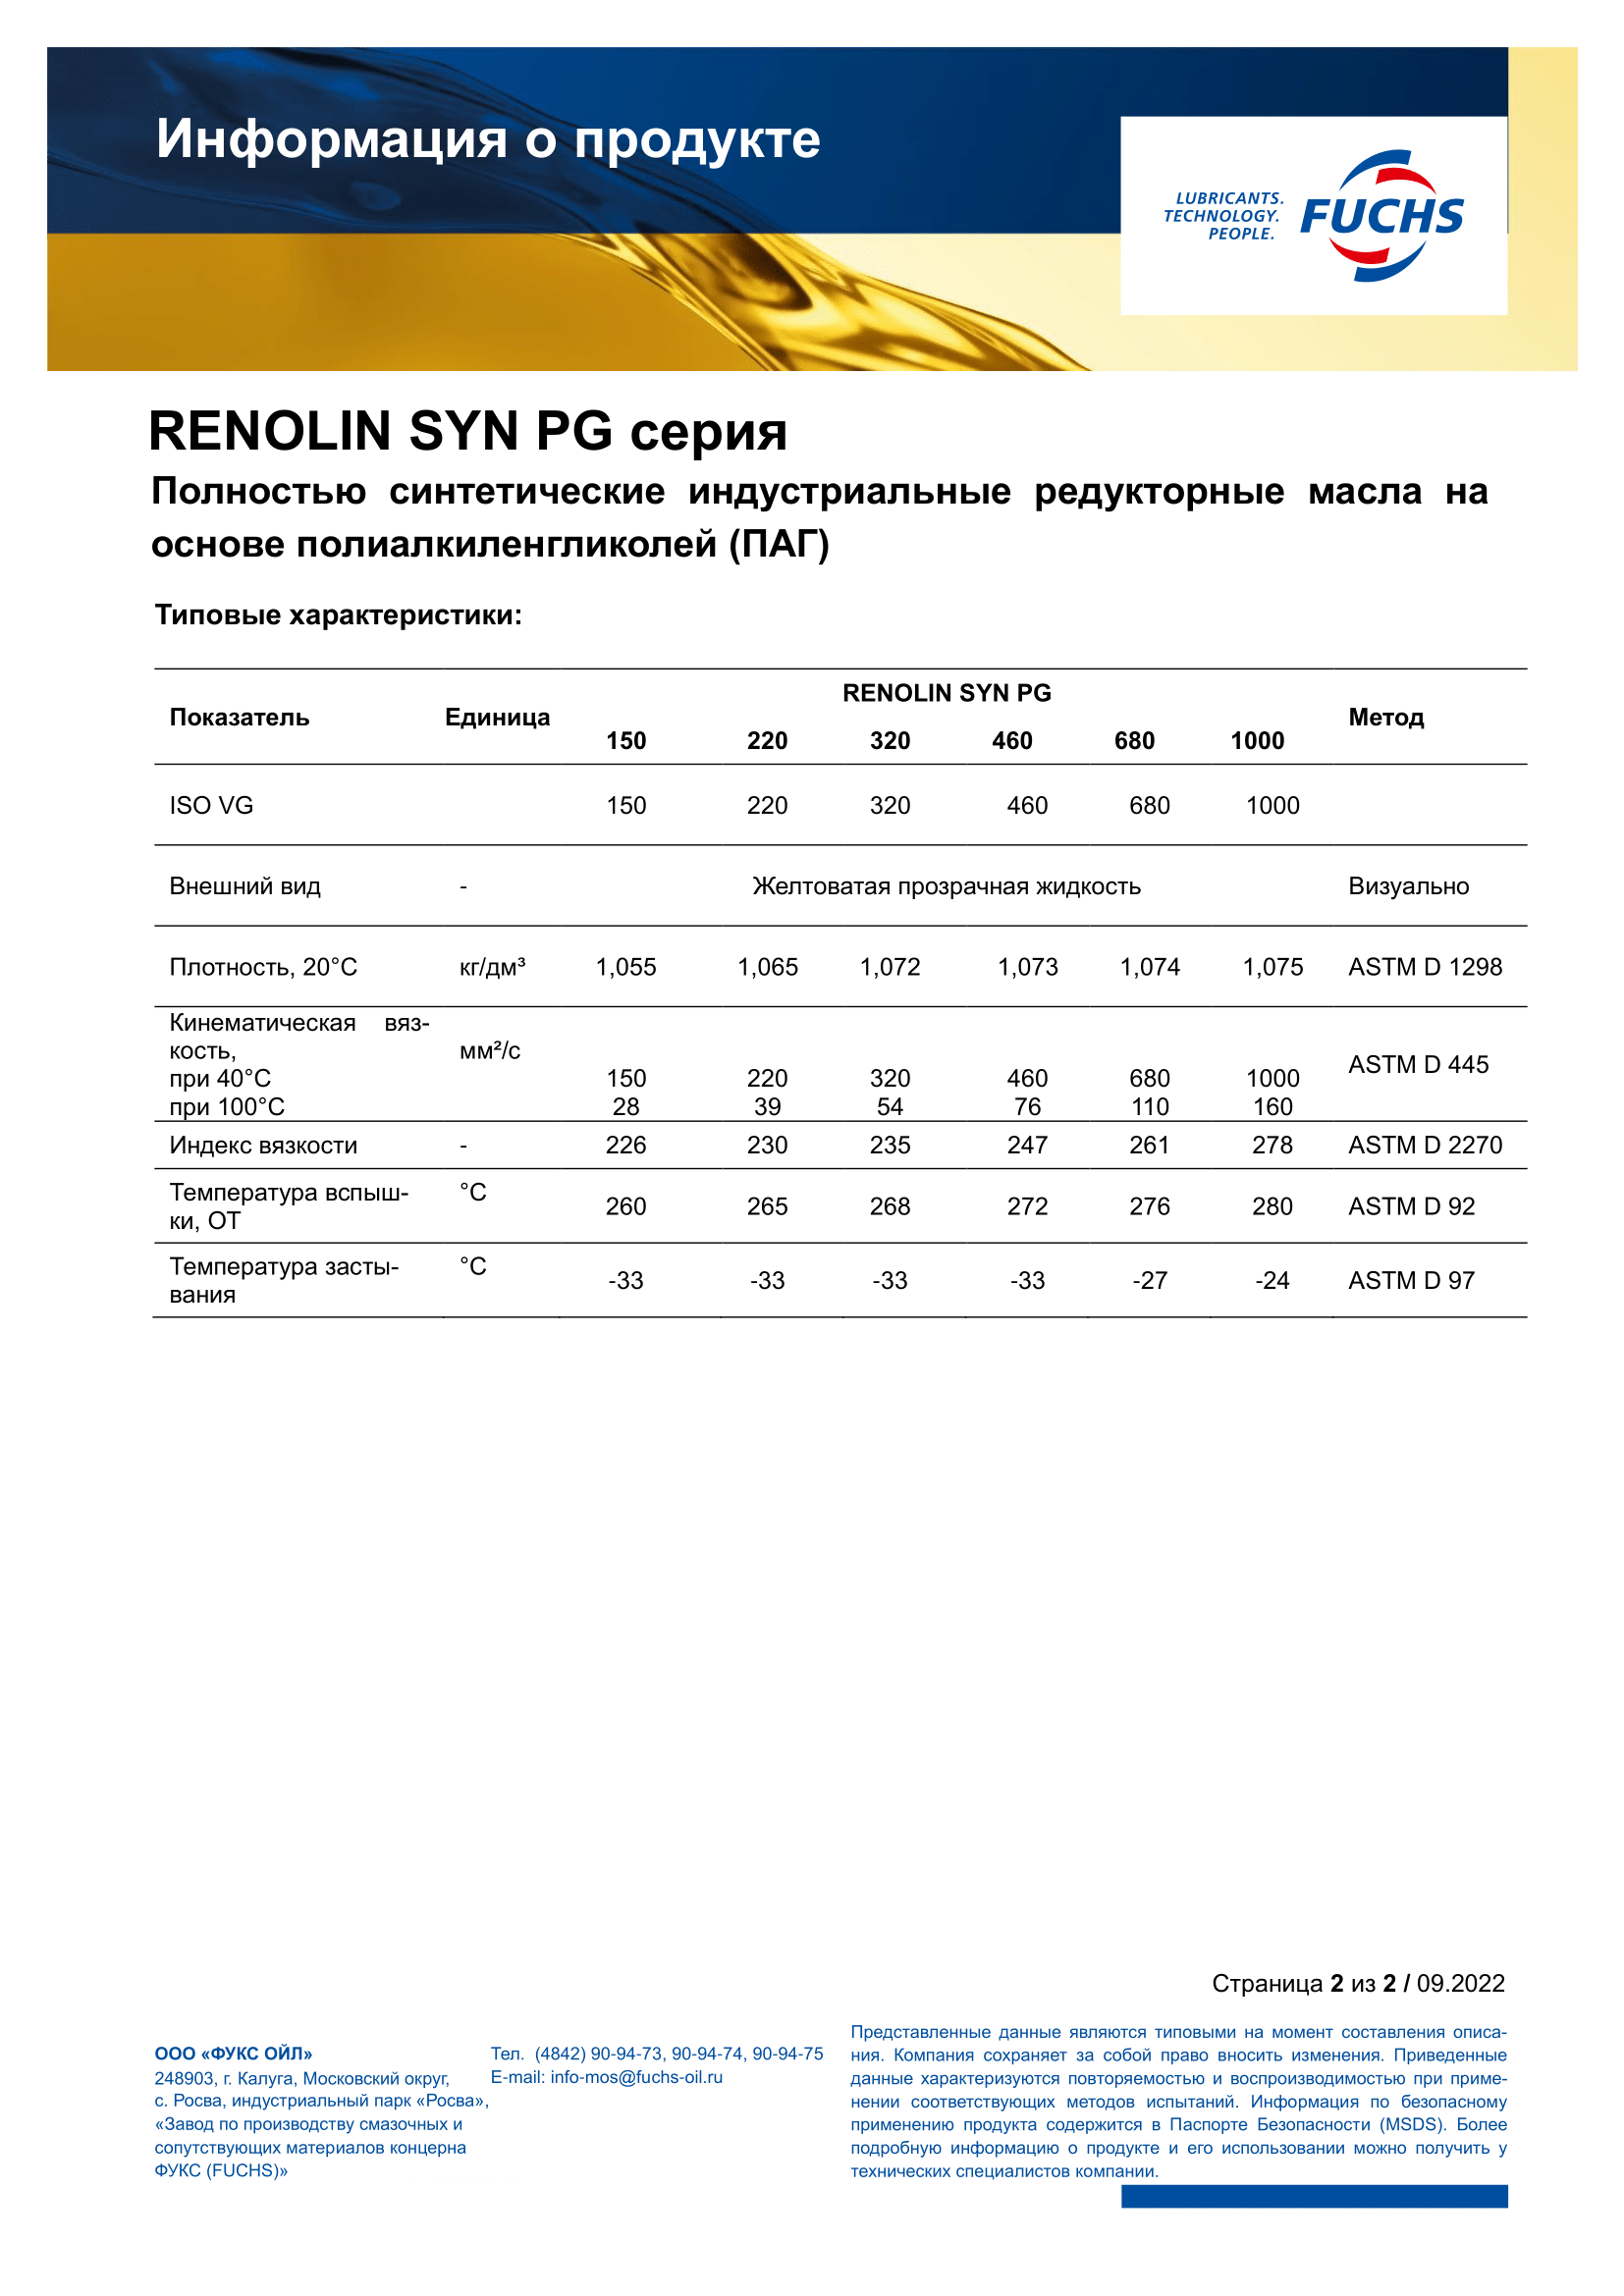 RENOLIN SYN PG 460